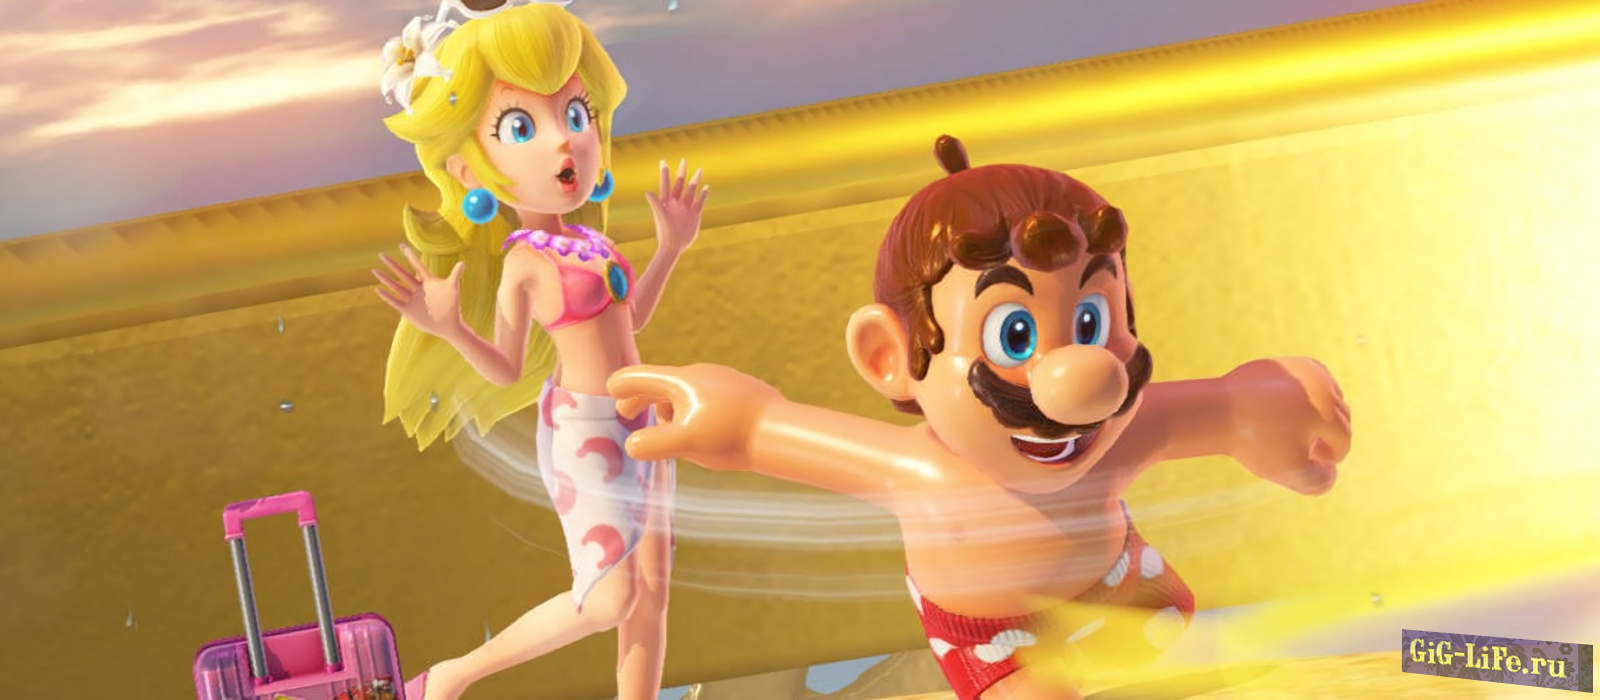 Nintendo запретила порно-игру про Принцессу Пич из Super Mario